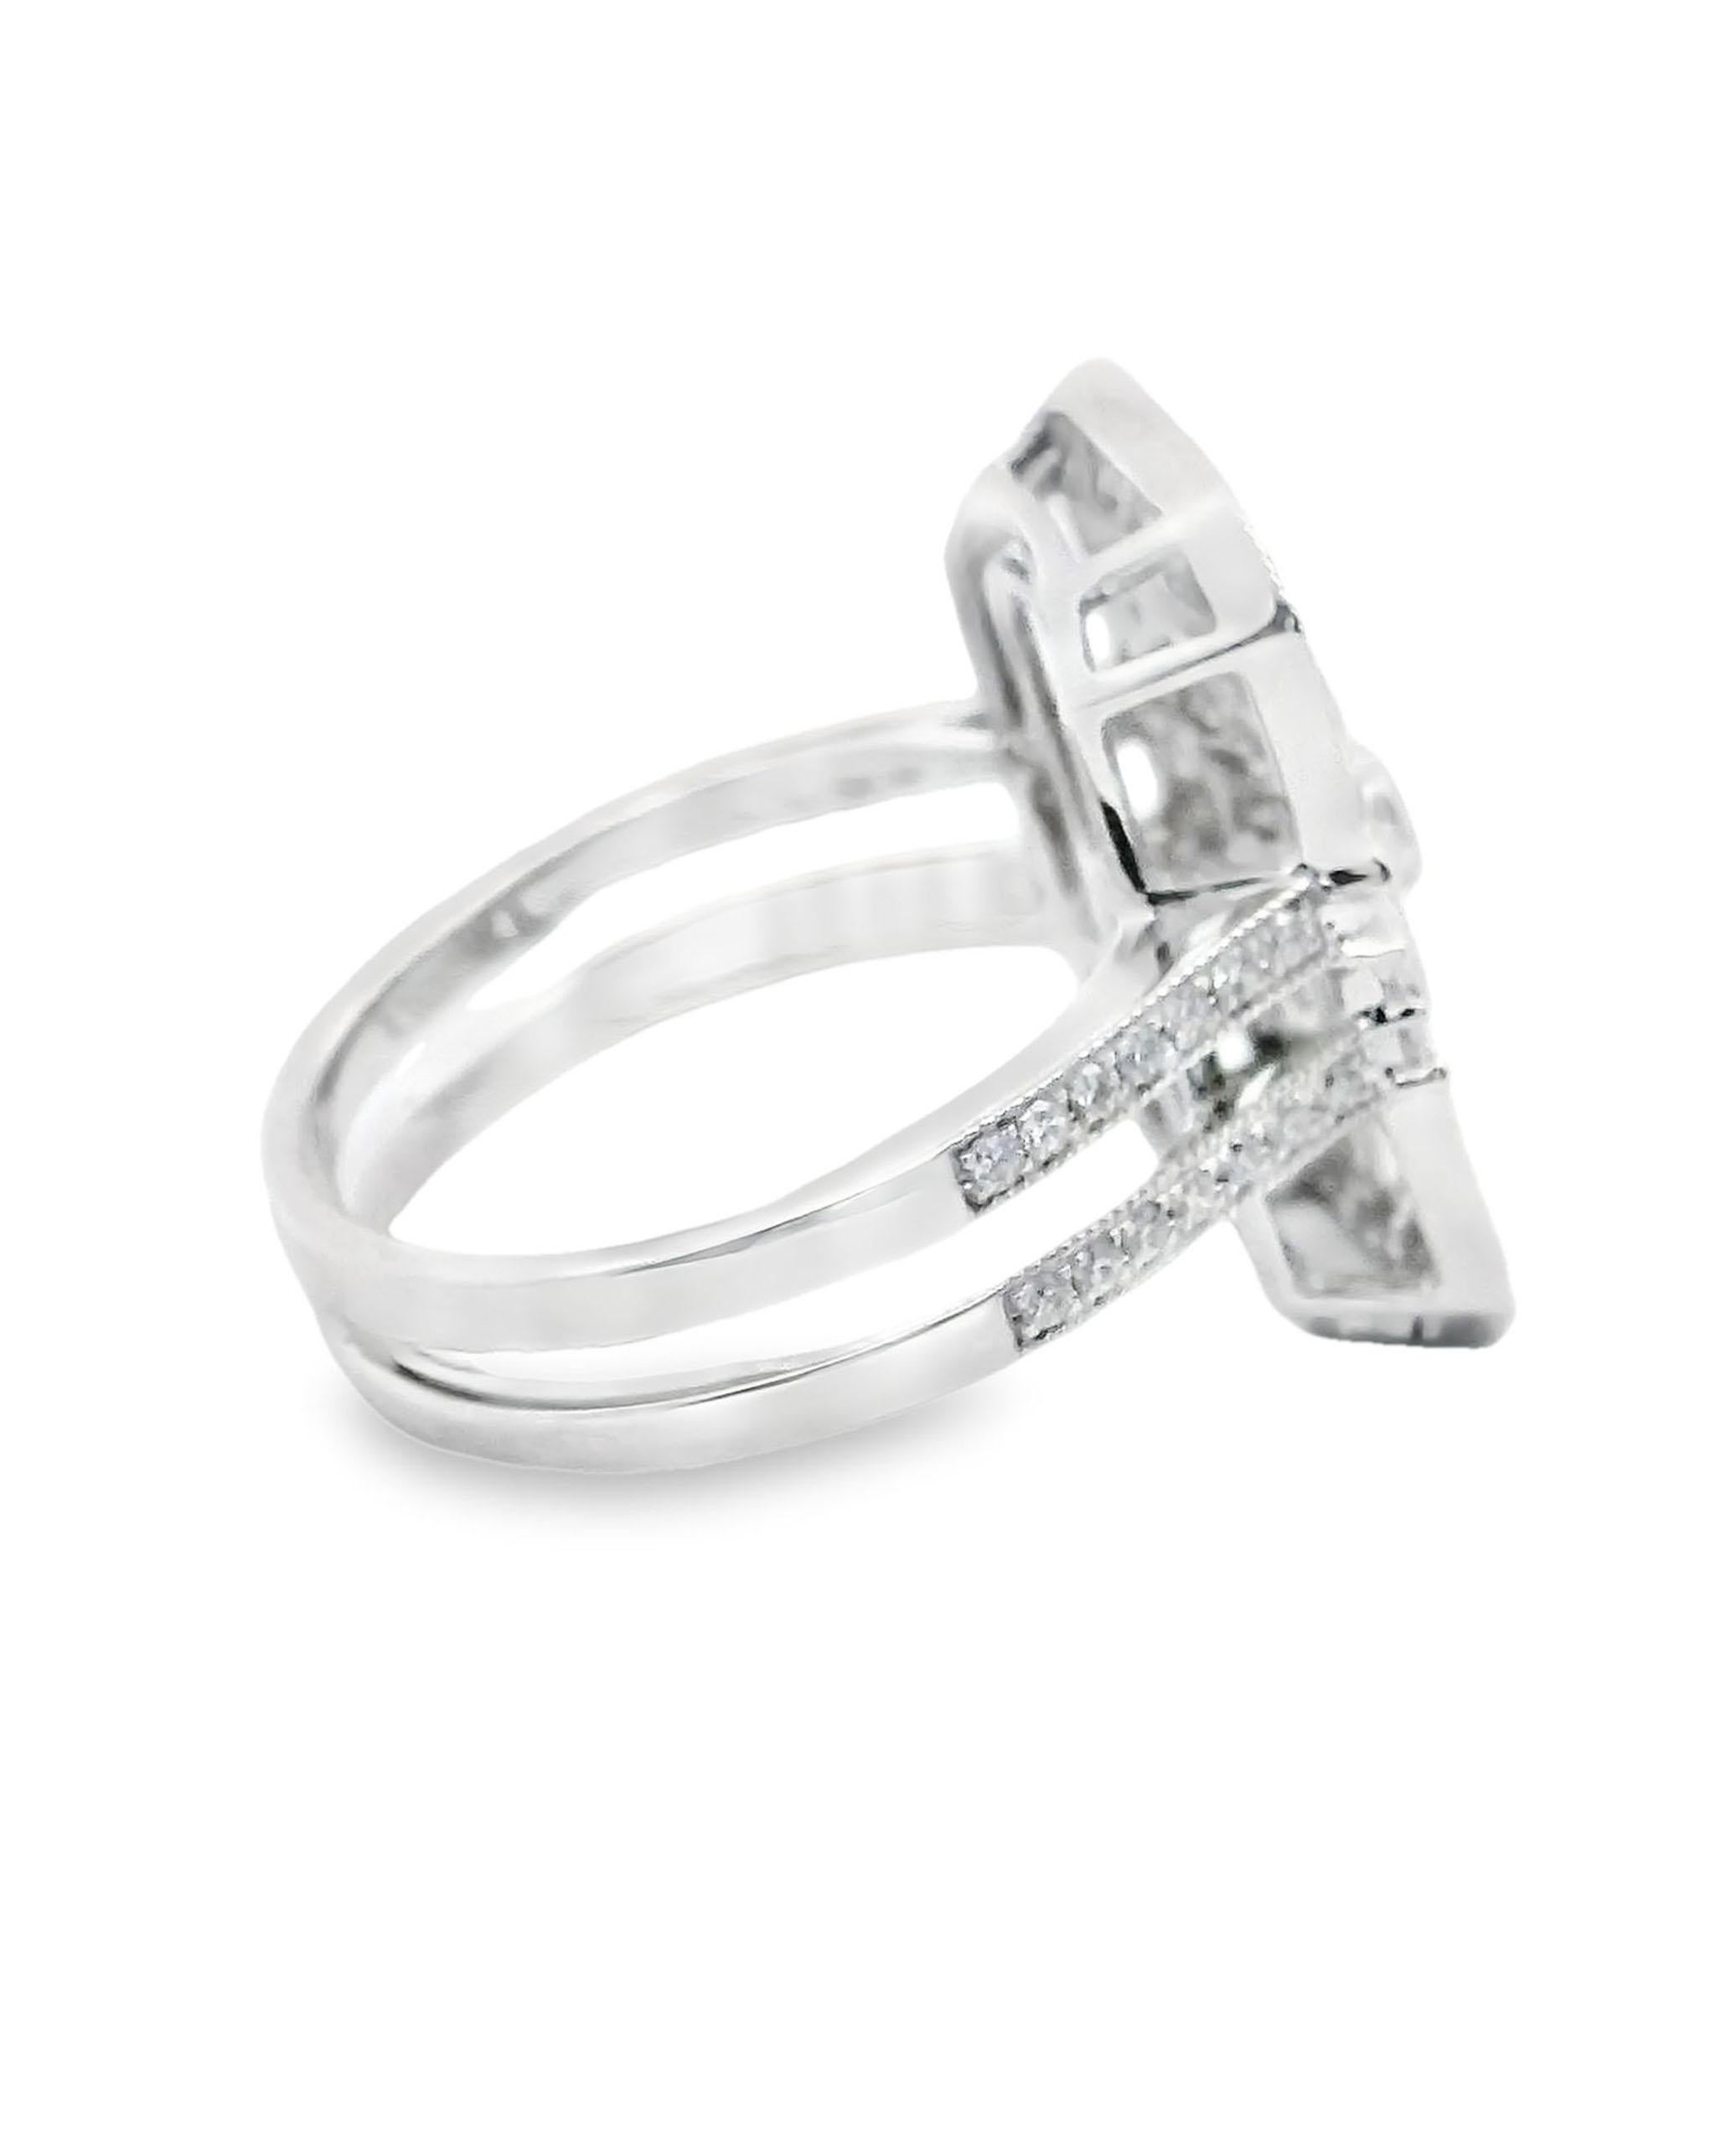 Round Cut 18K White Gold Art Deco Inspired Diamond Ring For Sale